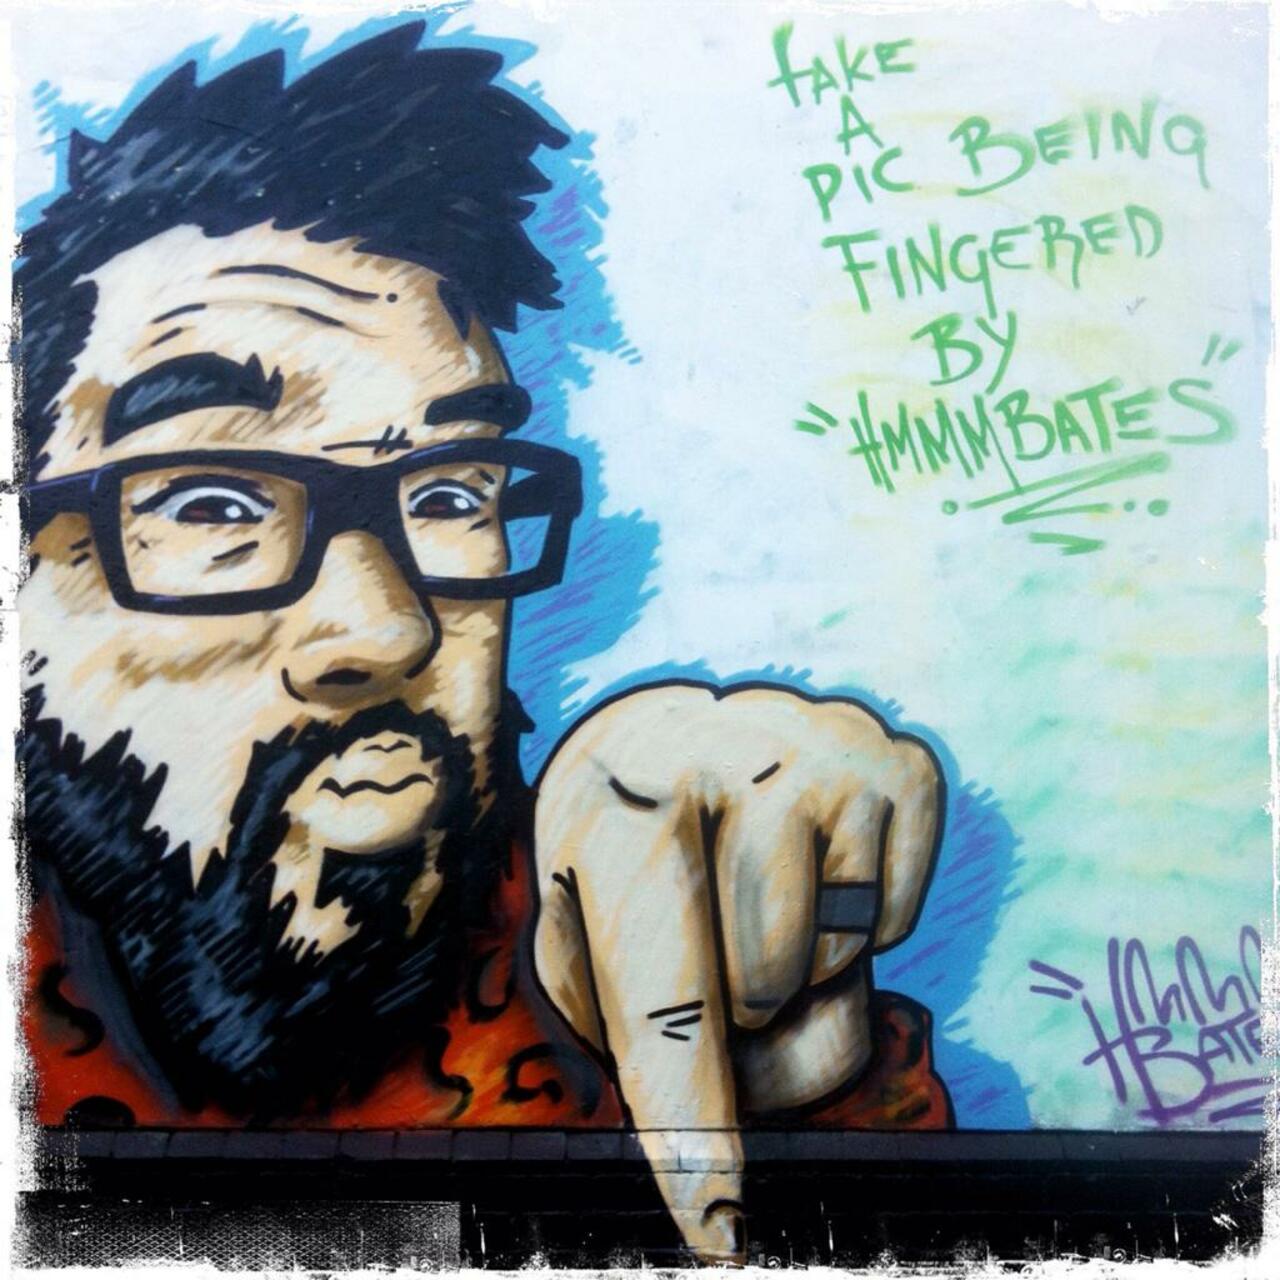 RT @BrickLaneArt: Fingered by @PauliBates at the Shoreditch Art Wall #shoreditchcurtain #streetart #graffiti http://t.co/tkct7L67FY